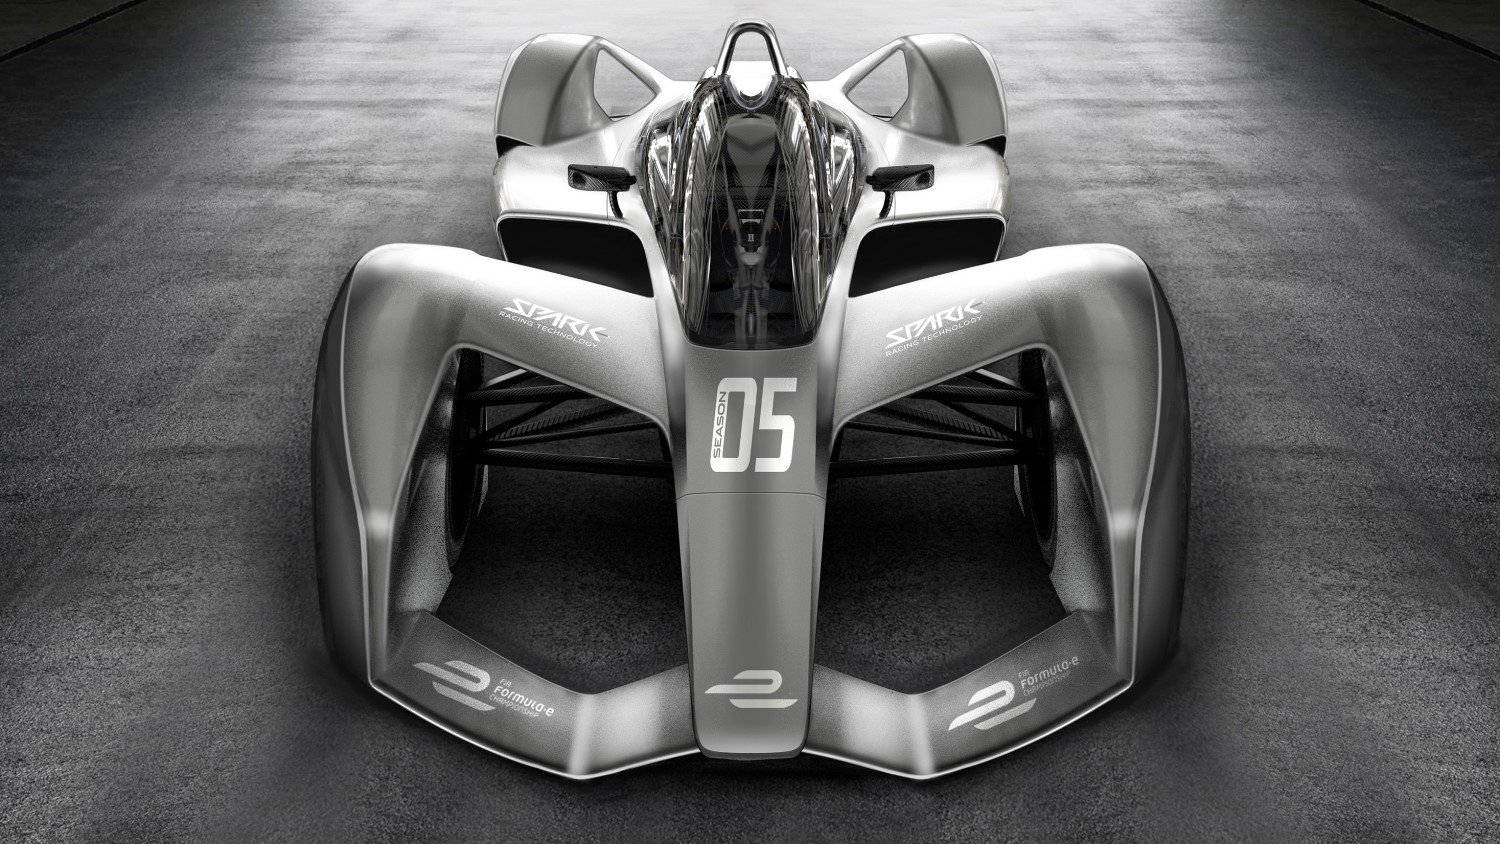 Next-Gen Formula E car